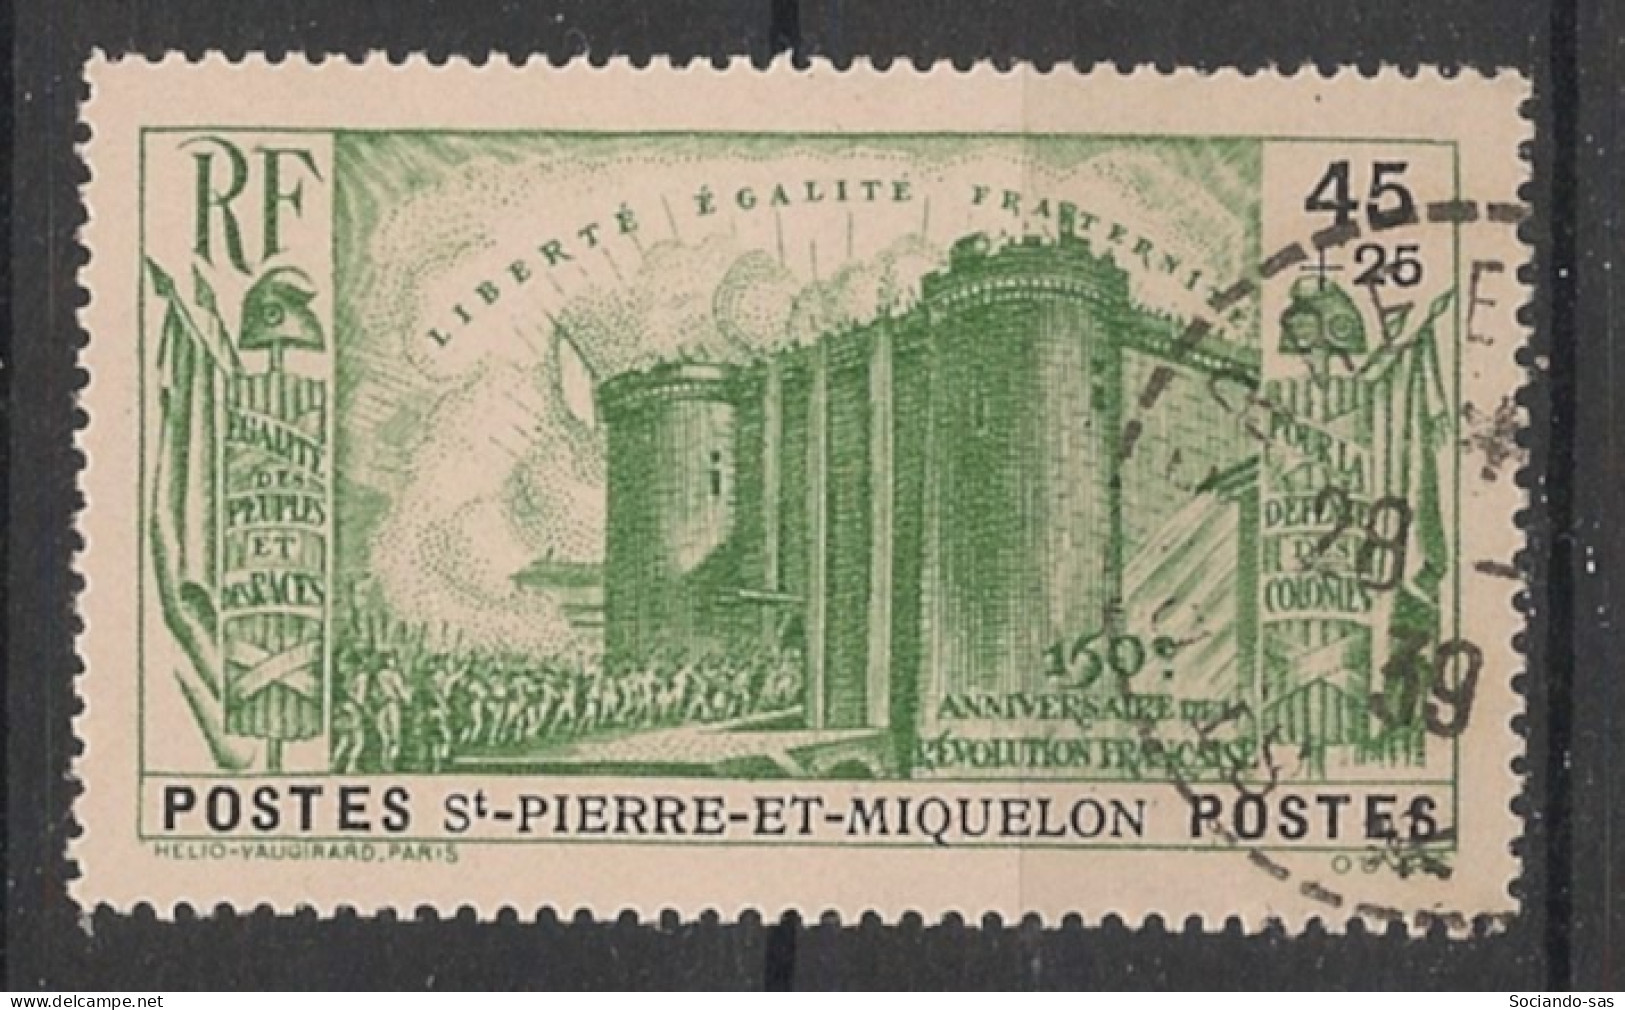 SPM - 1939 - N°YT. 191 - Révolution Française 45c + 25c Vert - Oblitéré / Used - Gebraucht